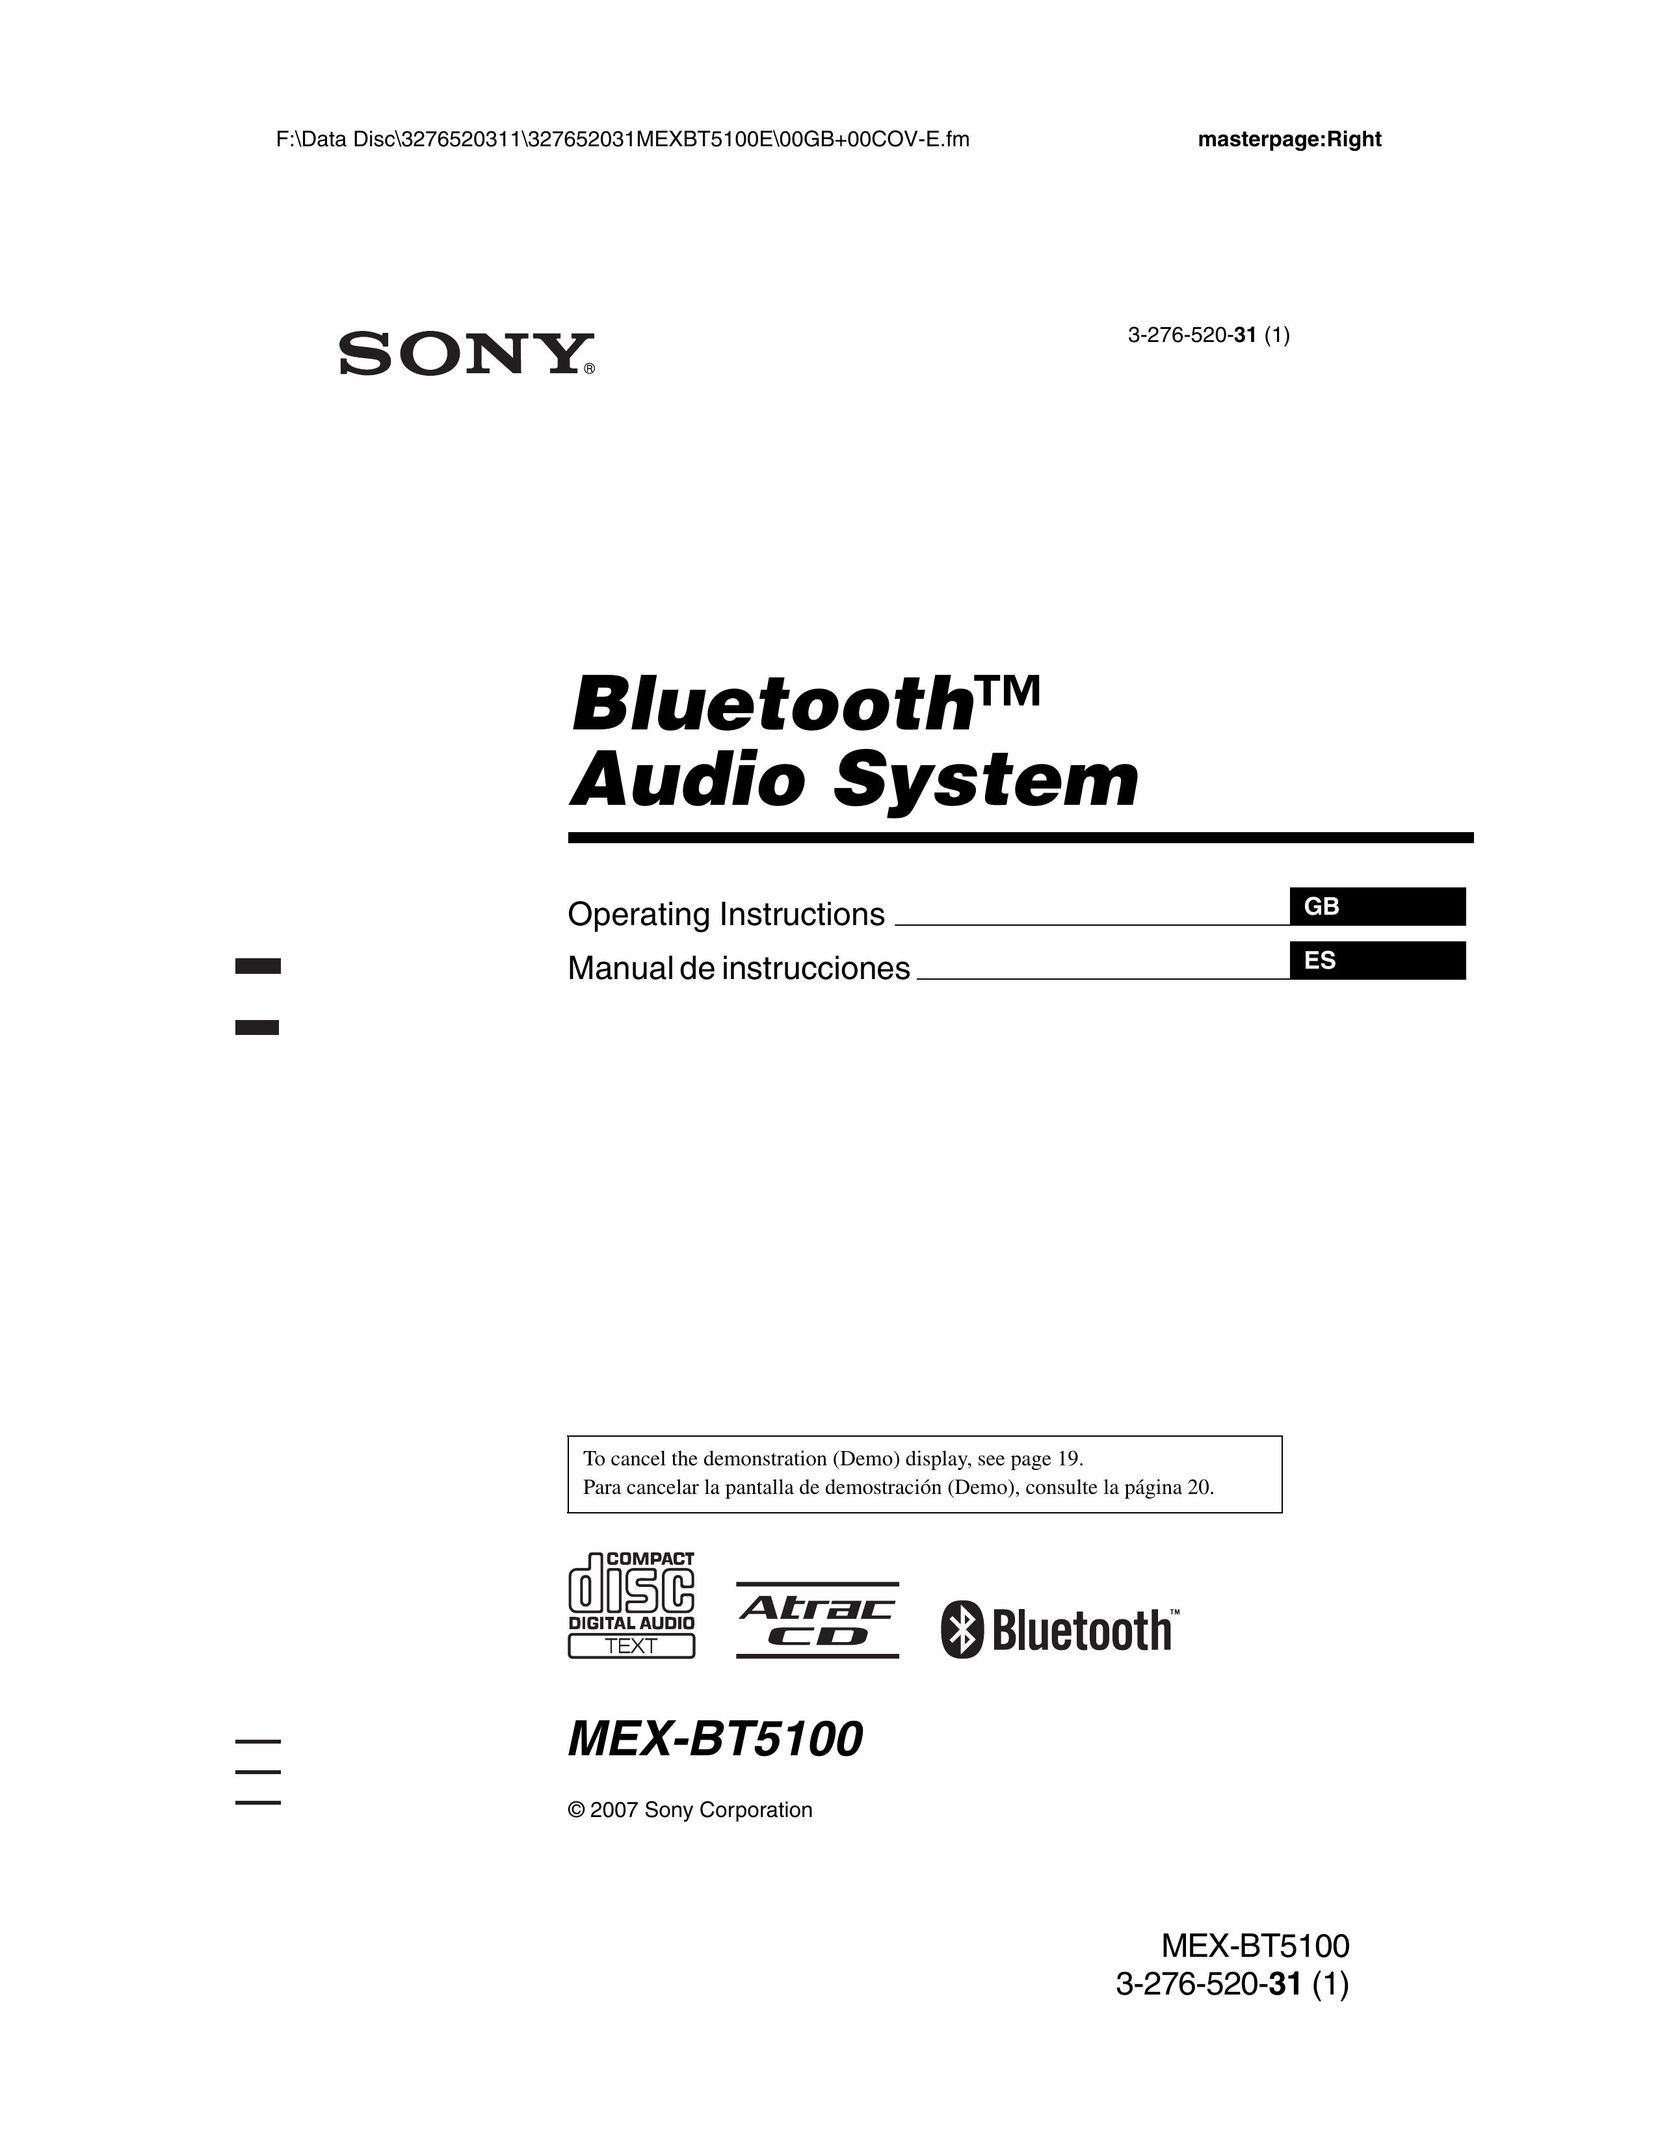 Sony MEX-BT5100 Bluetooth Headset User Manual